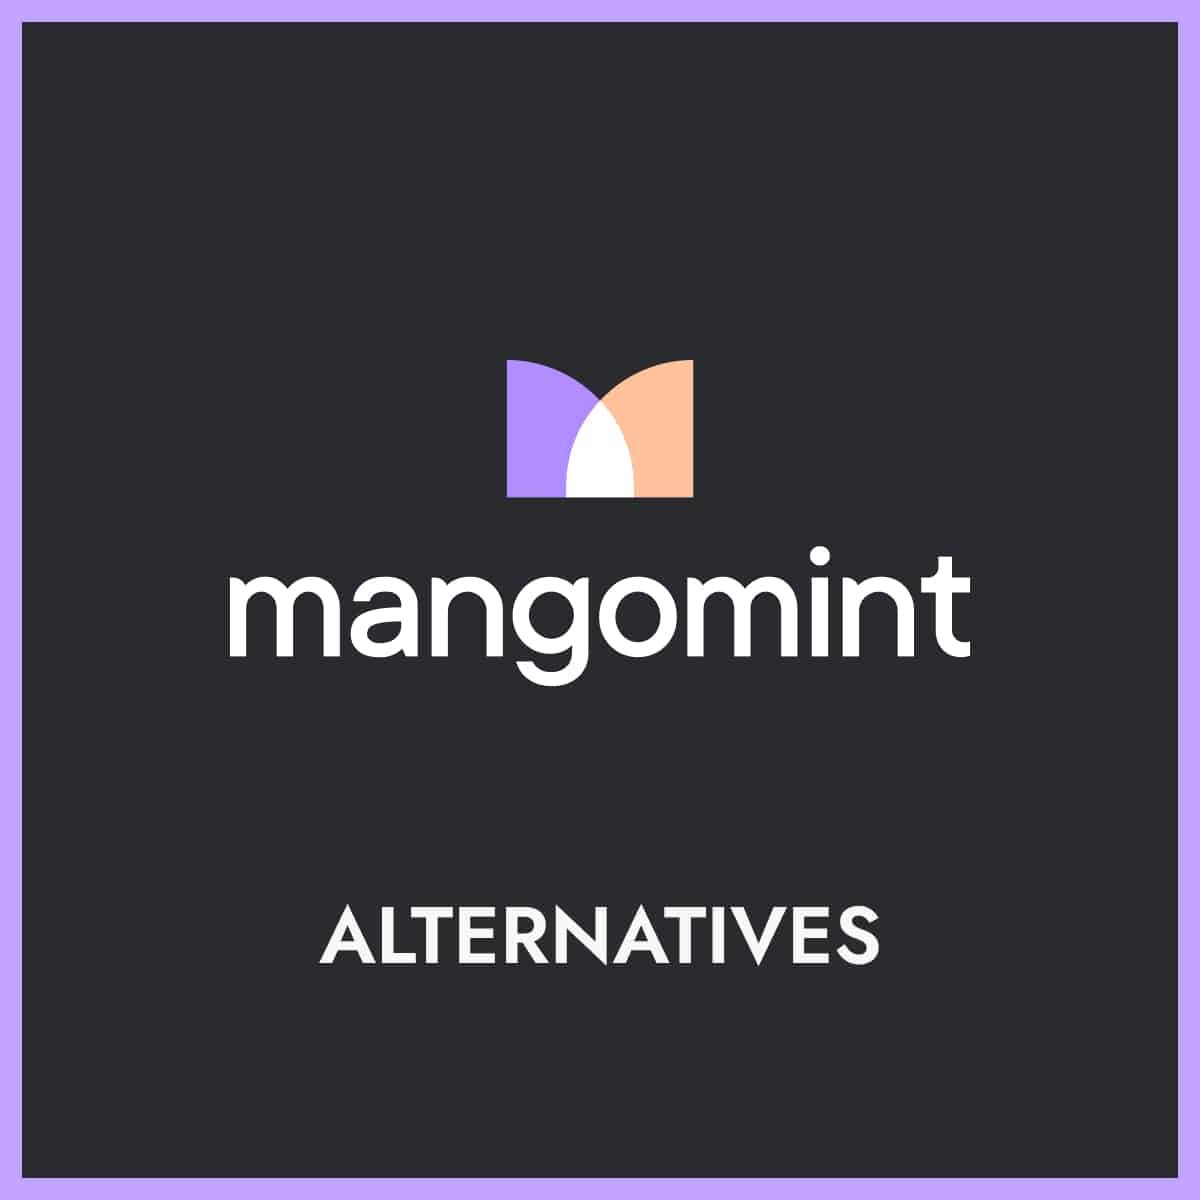 Mangomint logo above the word "alternatives"